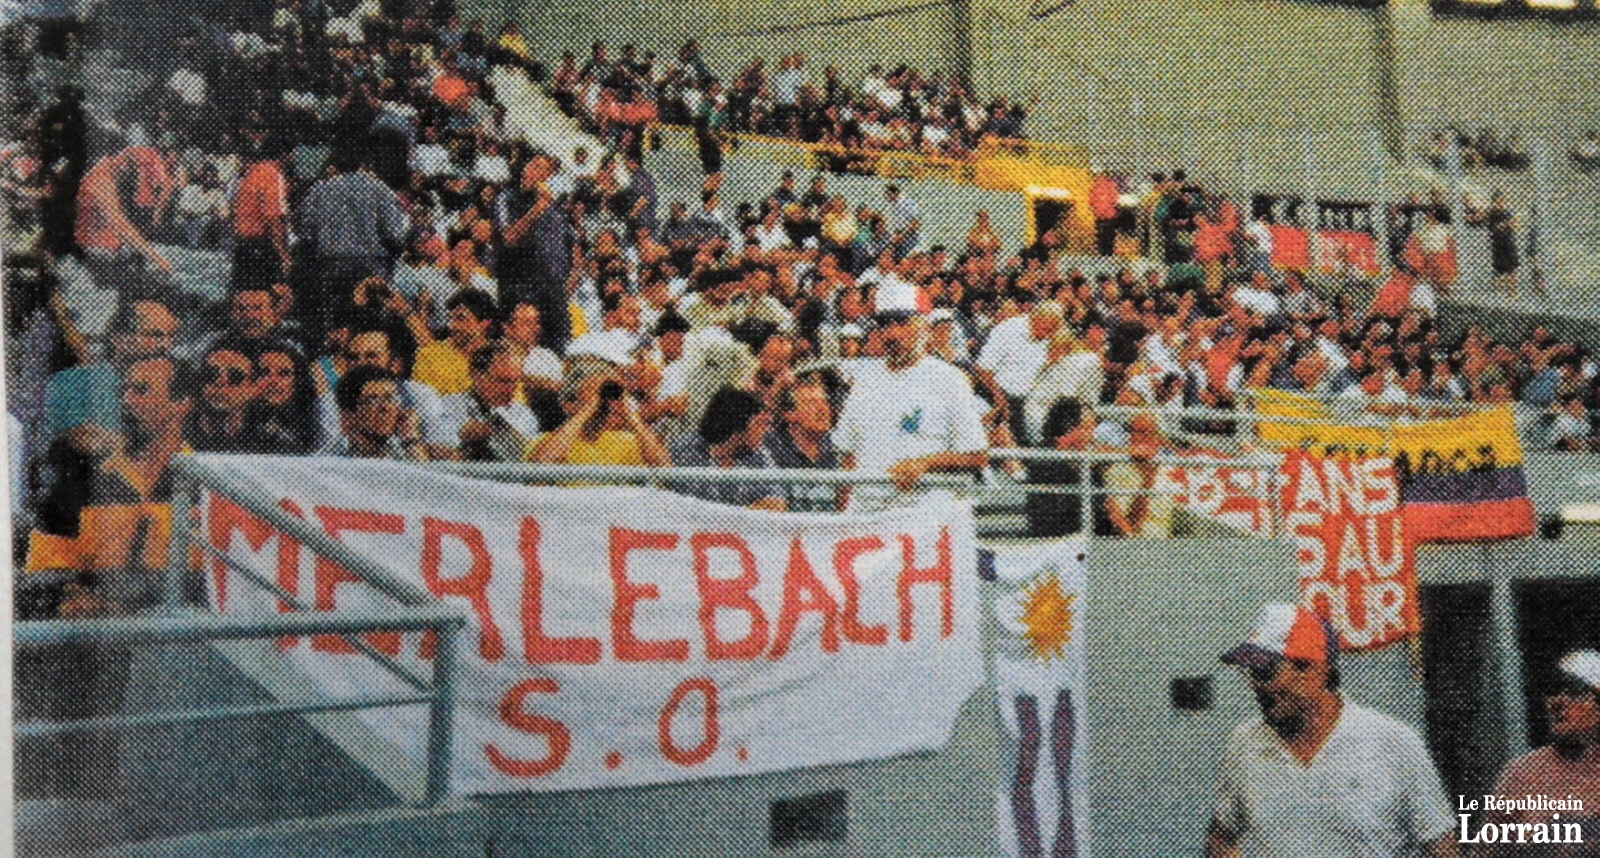 La banderole « Merlebach » de Guy Grandjean au Stadium de Toulouse en 1998.